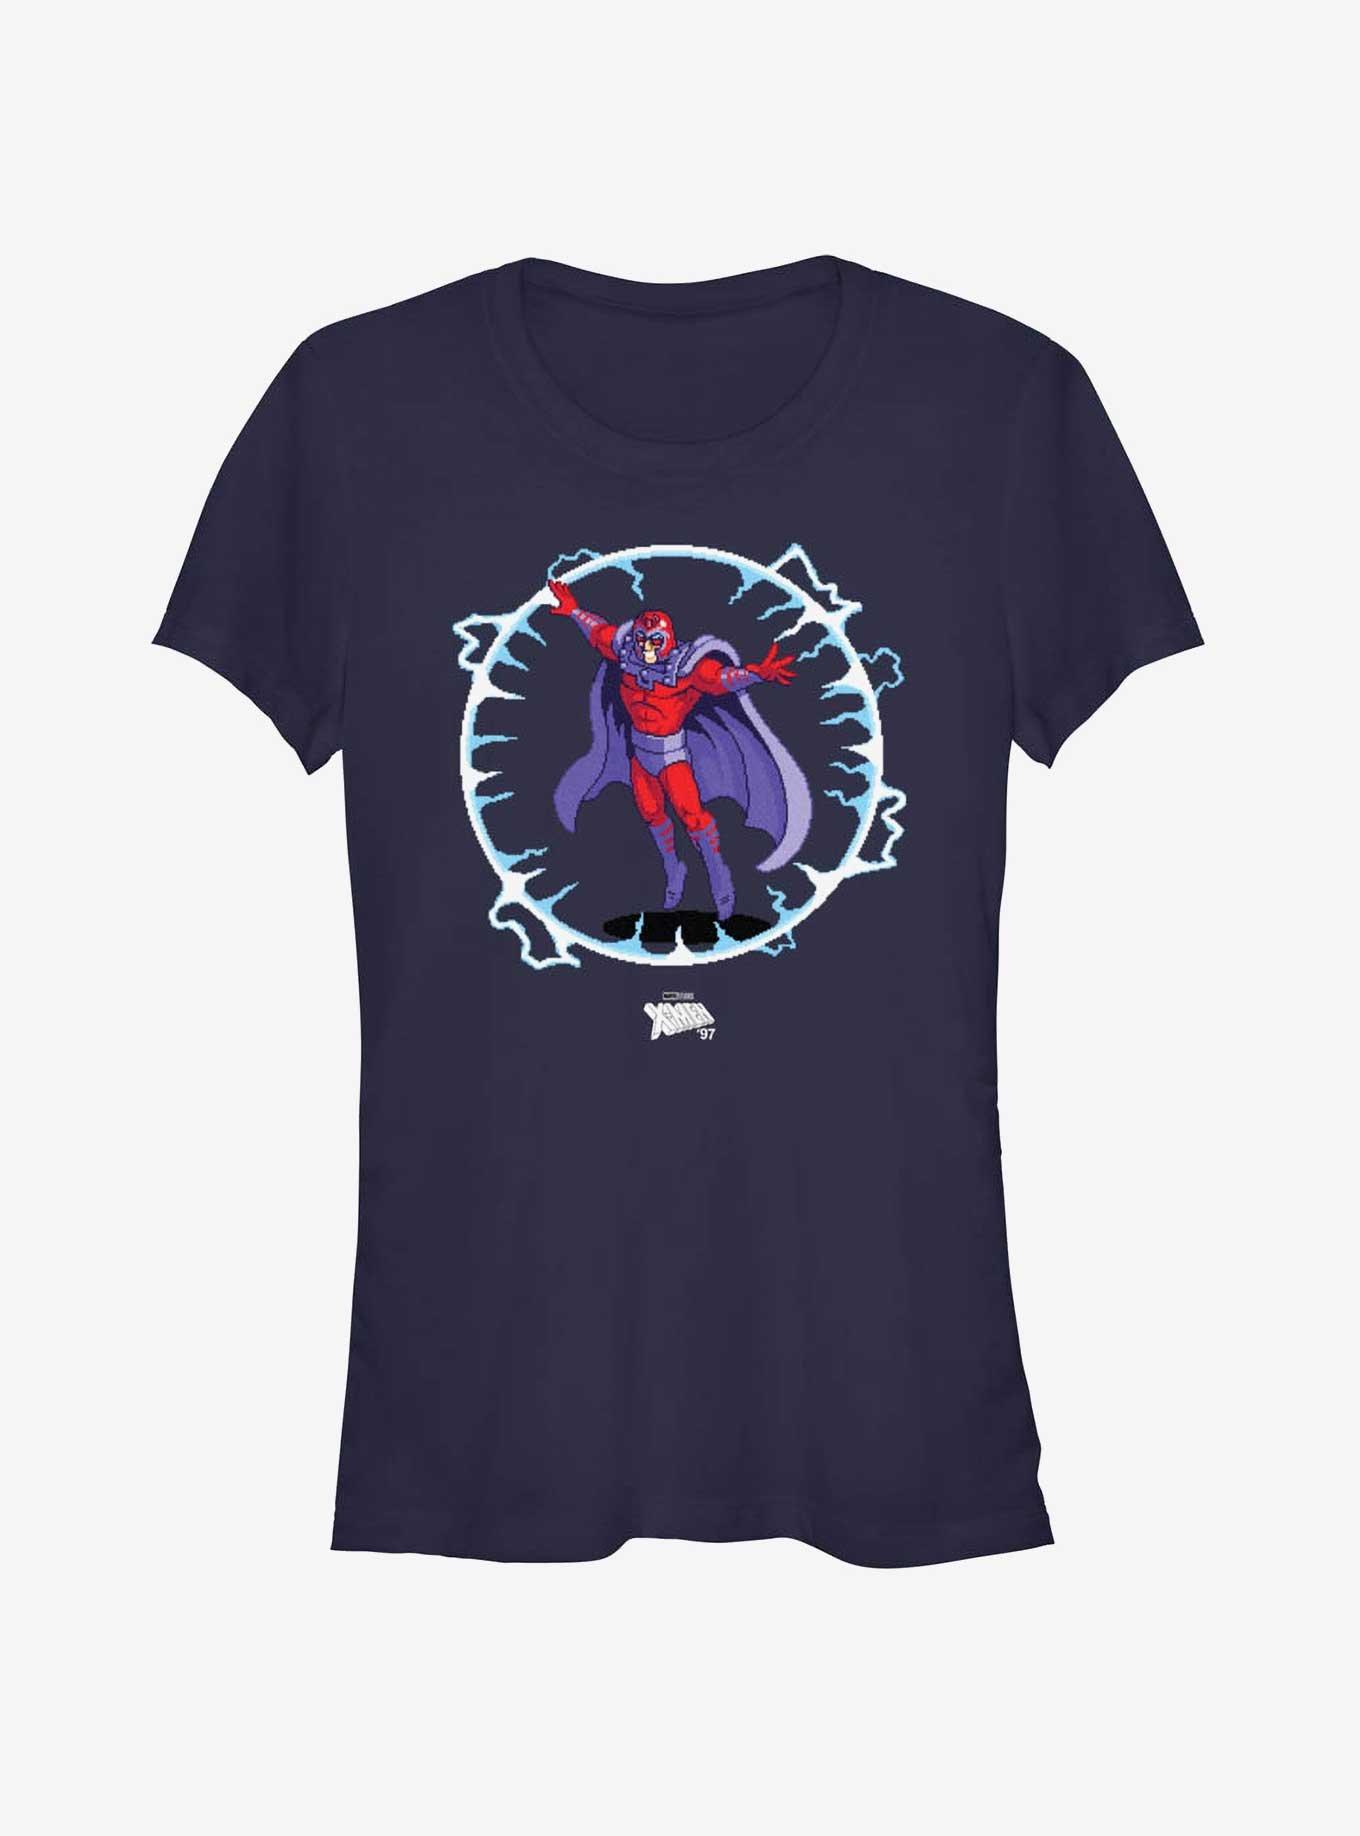 X-Men '97 Magneto PixelArt Girls T-Shirt, NAVY, hi-res